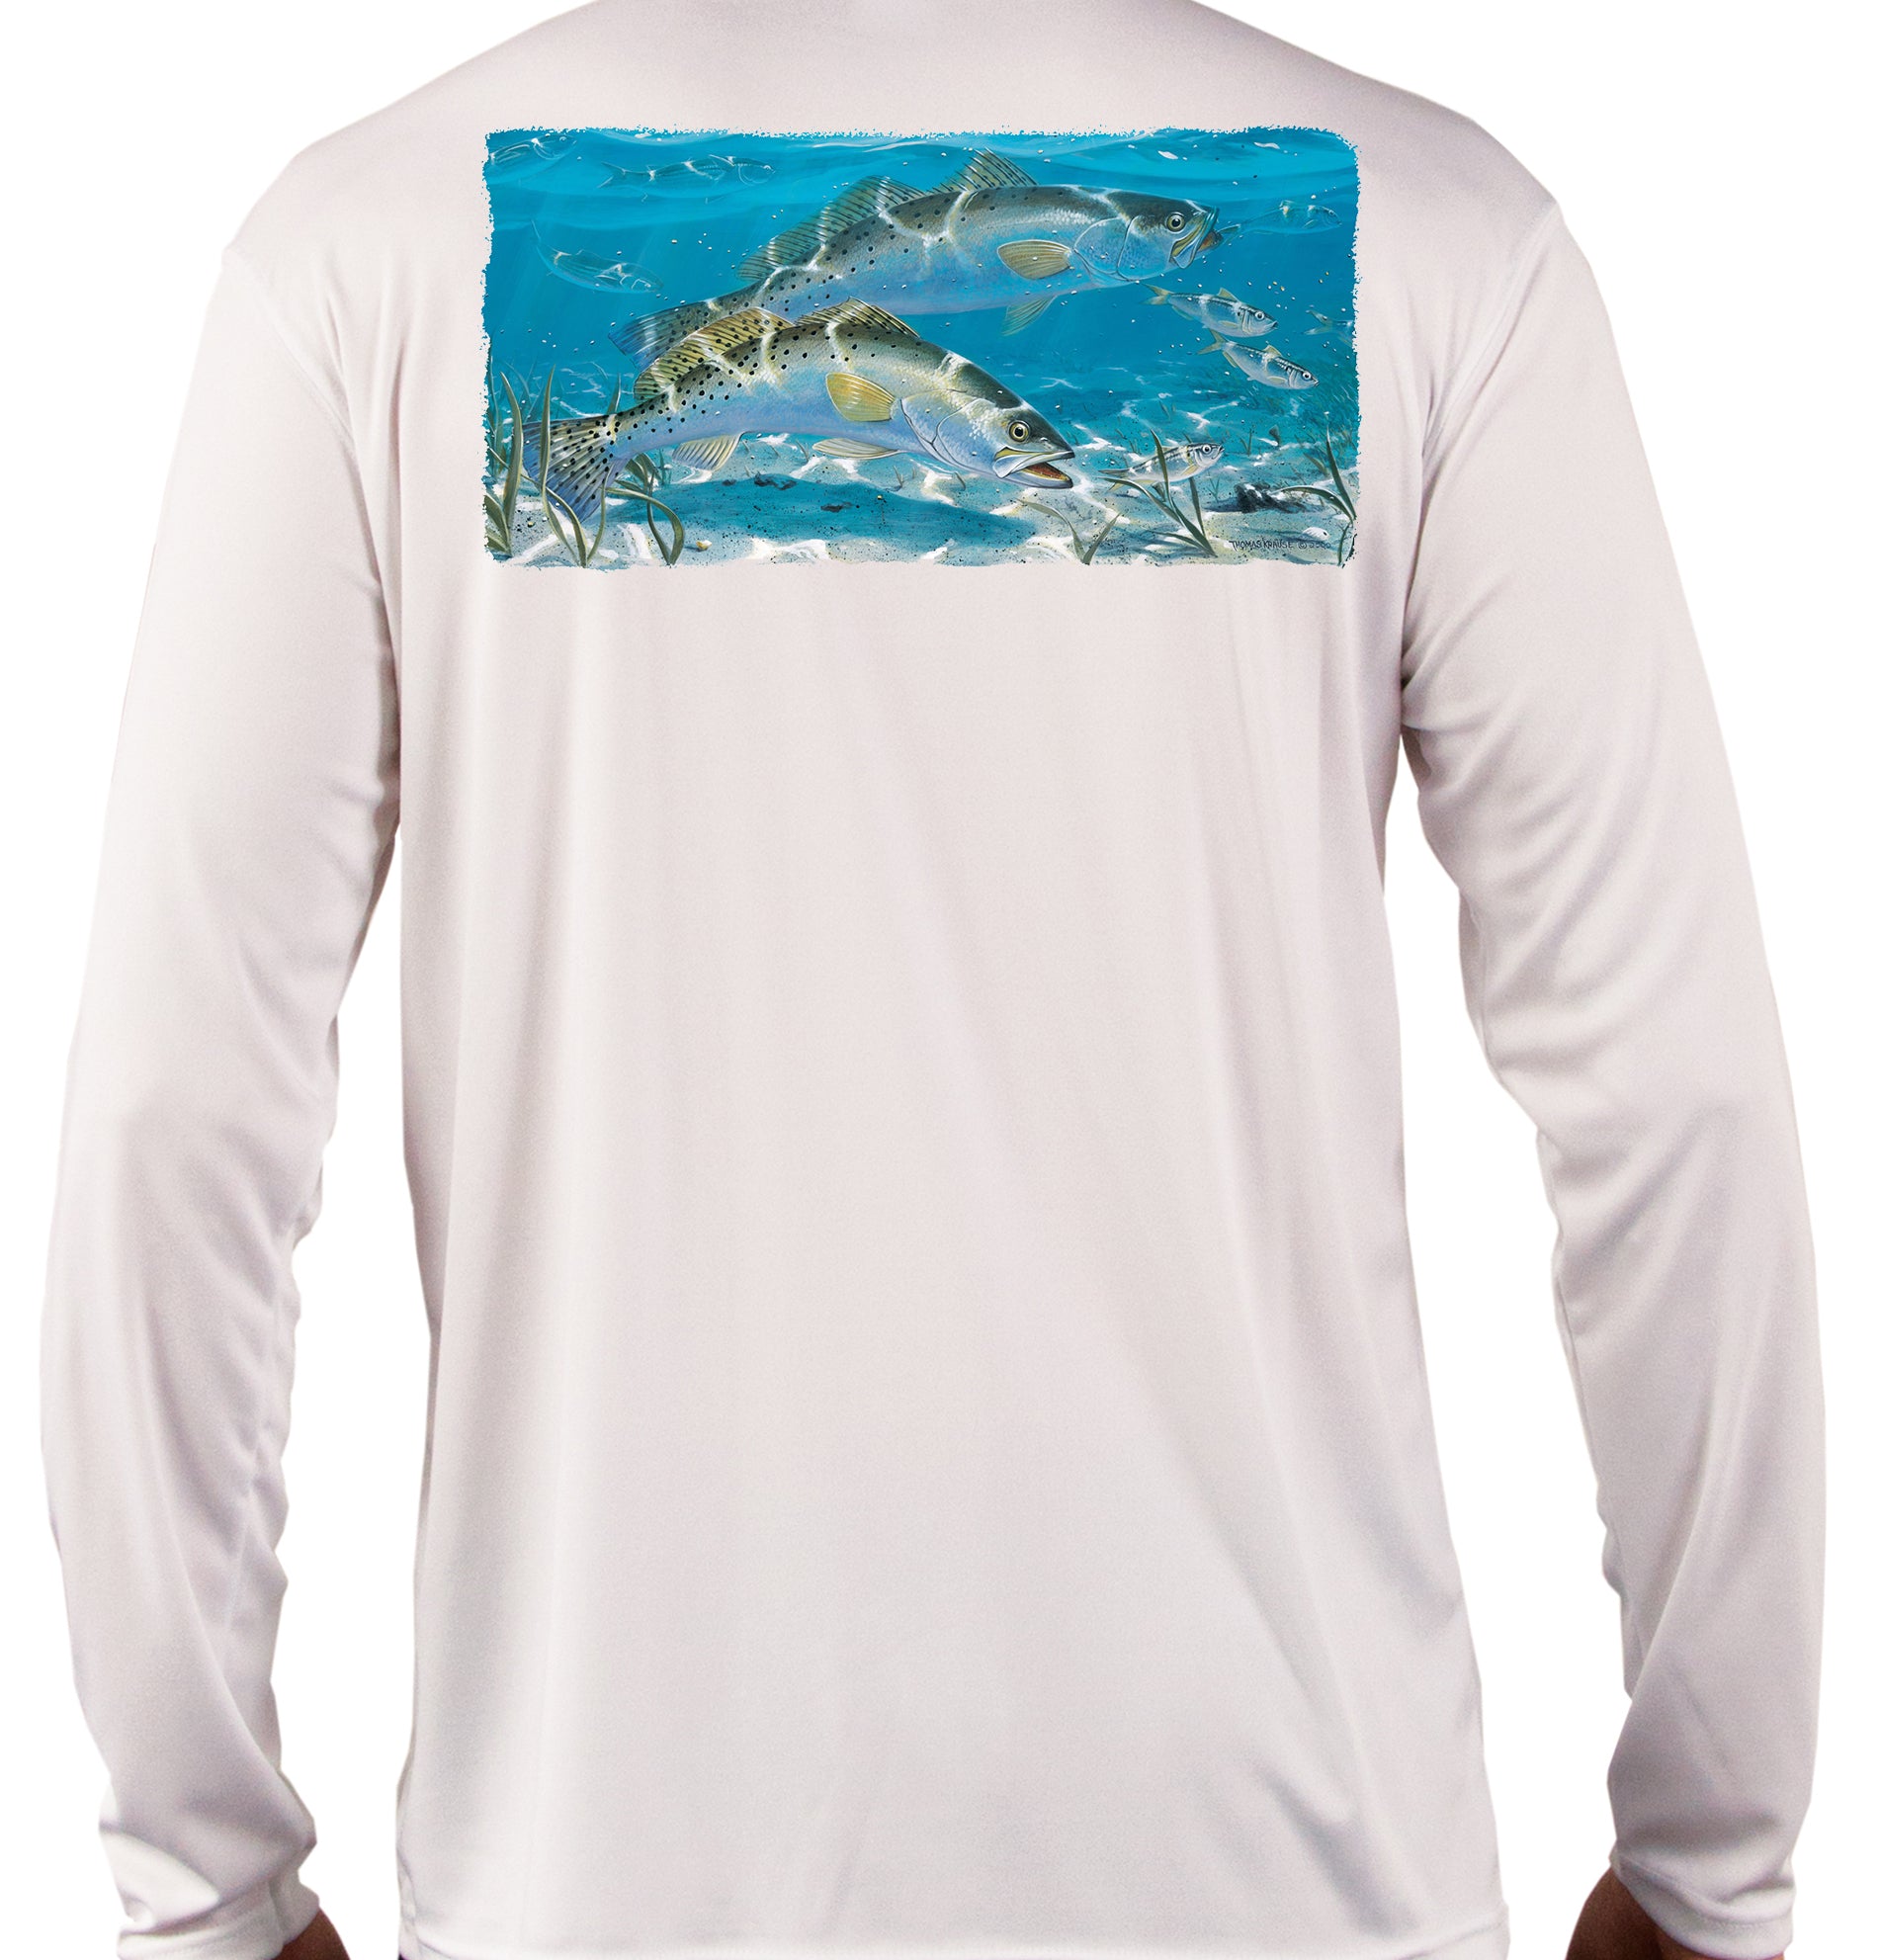 Fishing Shirts Men's Quick Dry Lightweight UPF 50+ Long Sleeve Shirts